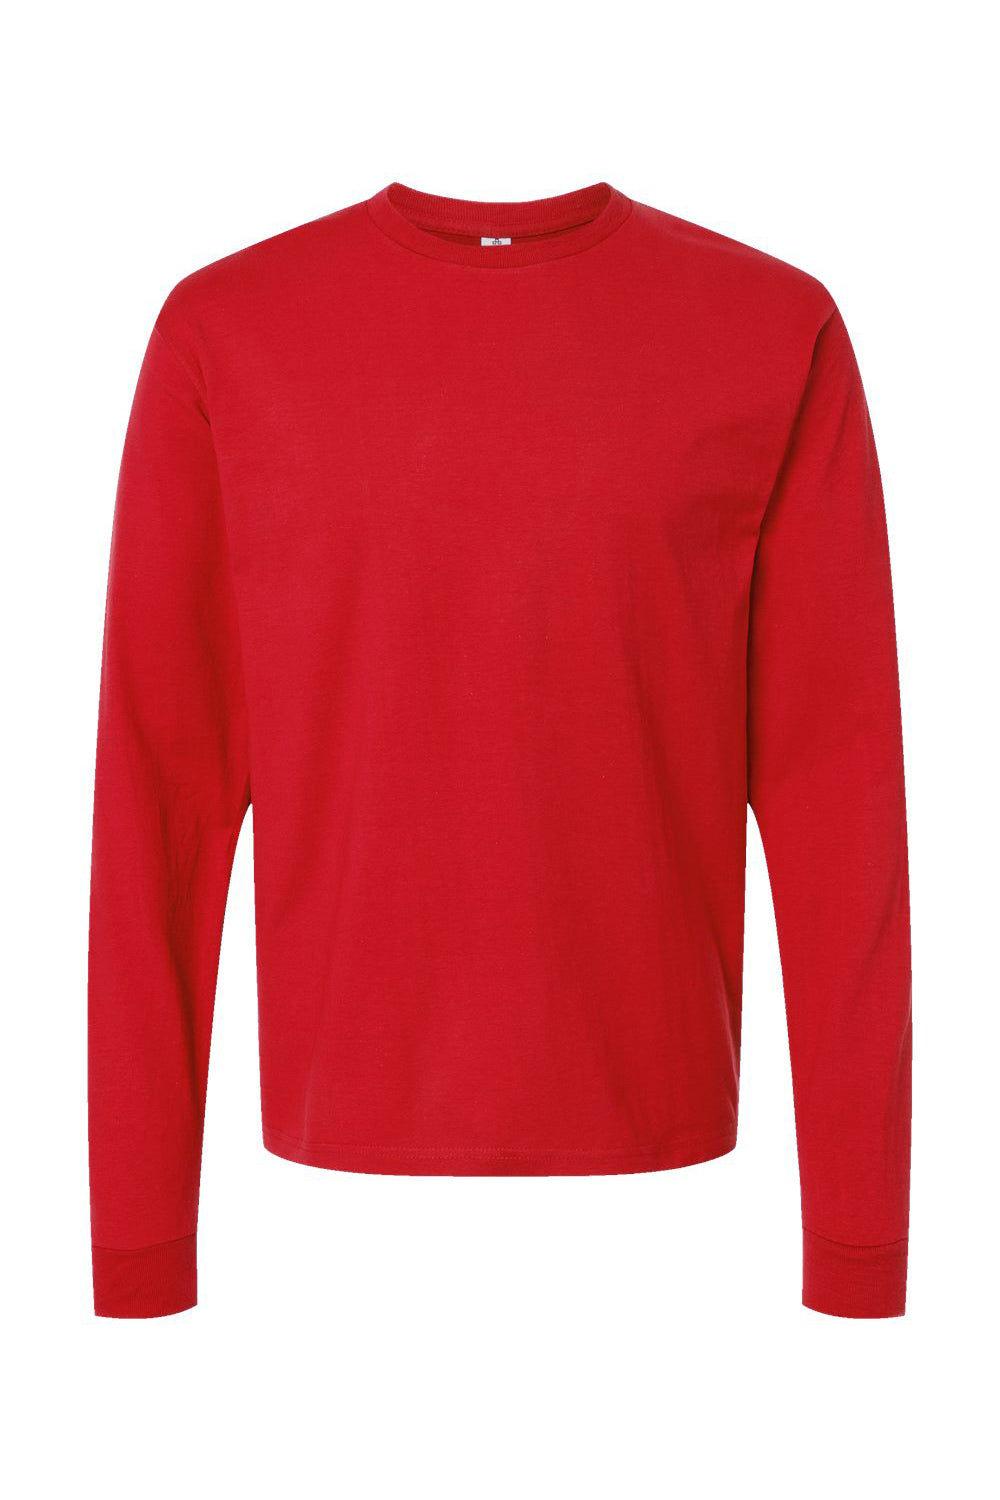 Tultex 291 Mens Jersey Long Sleeve Crewneck T-Shirt Red Flat Front